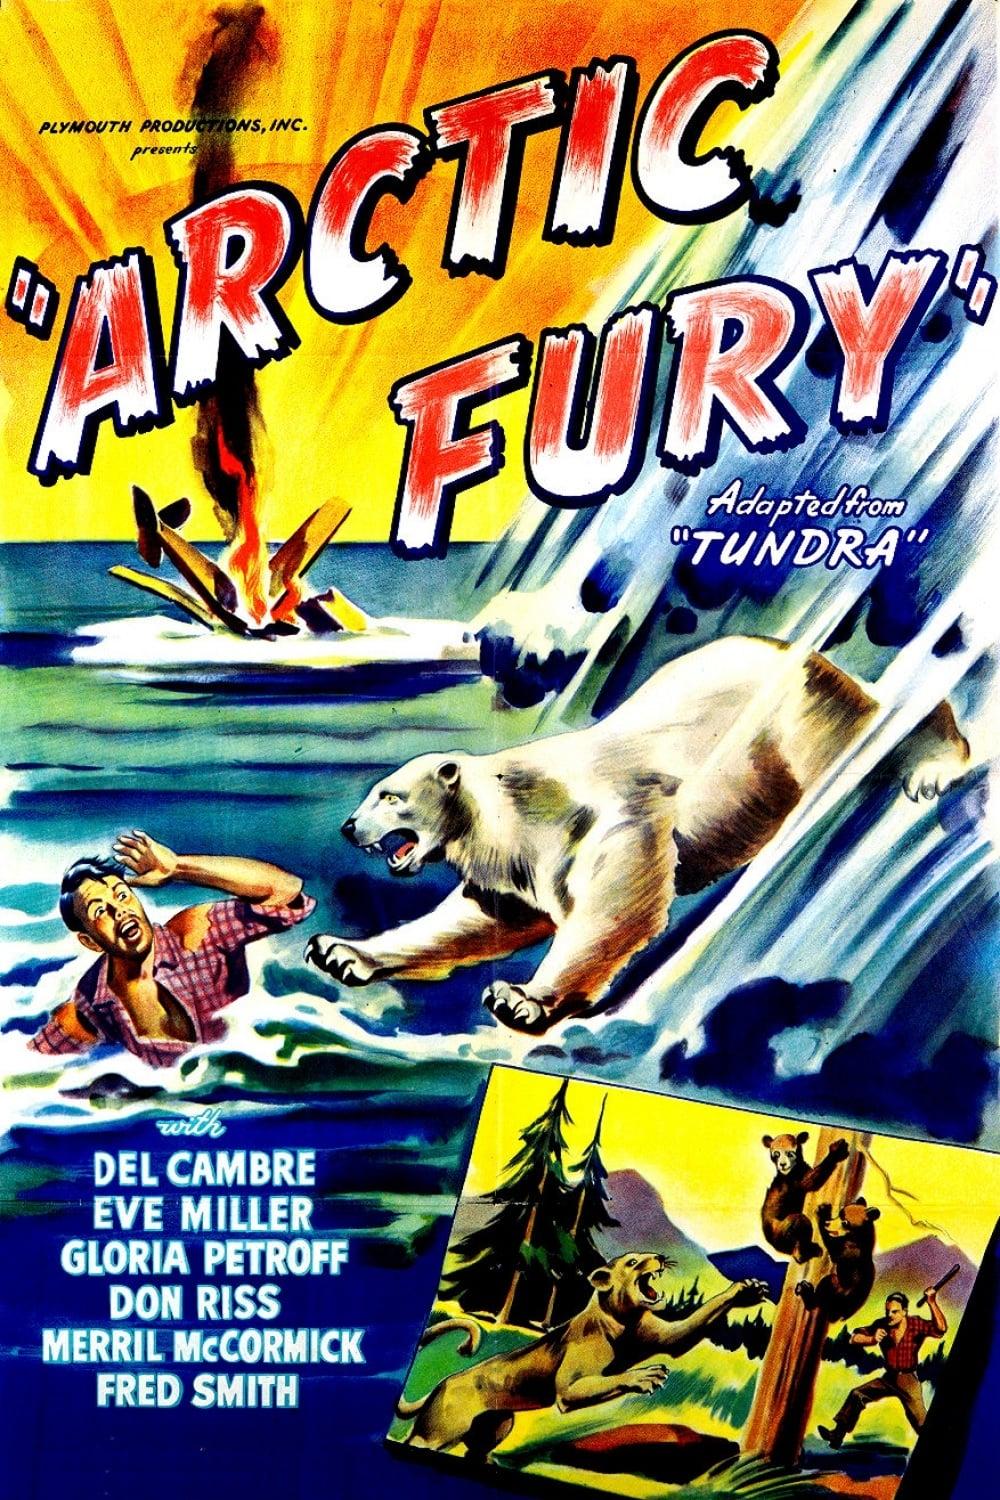 Arctic Fury poster